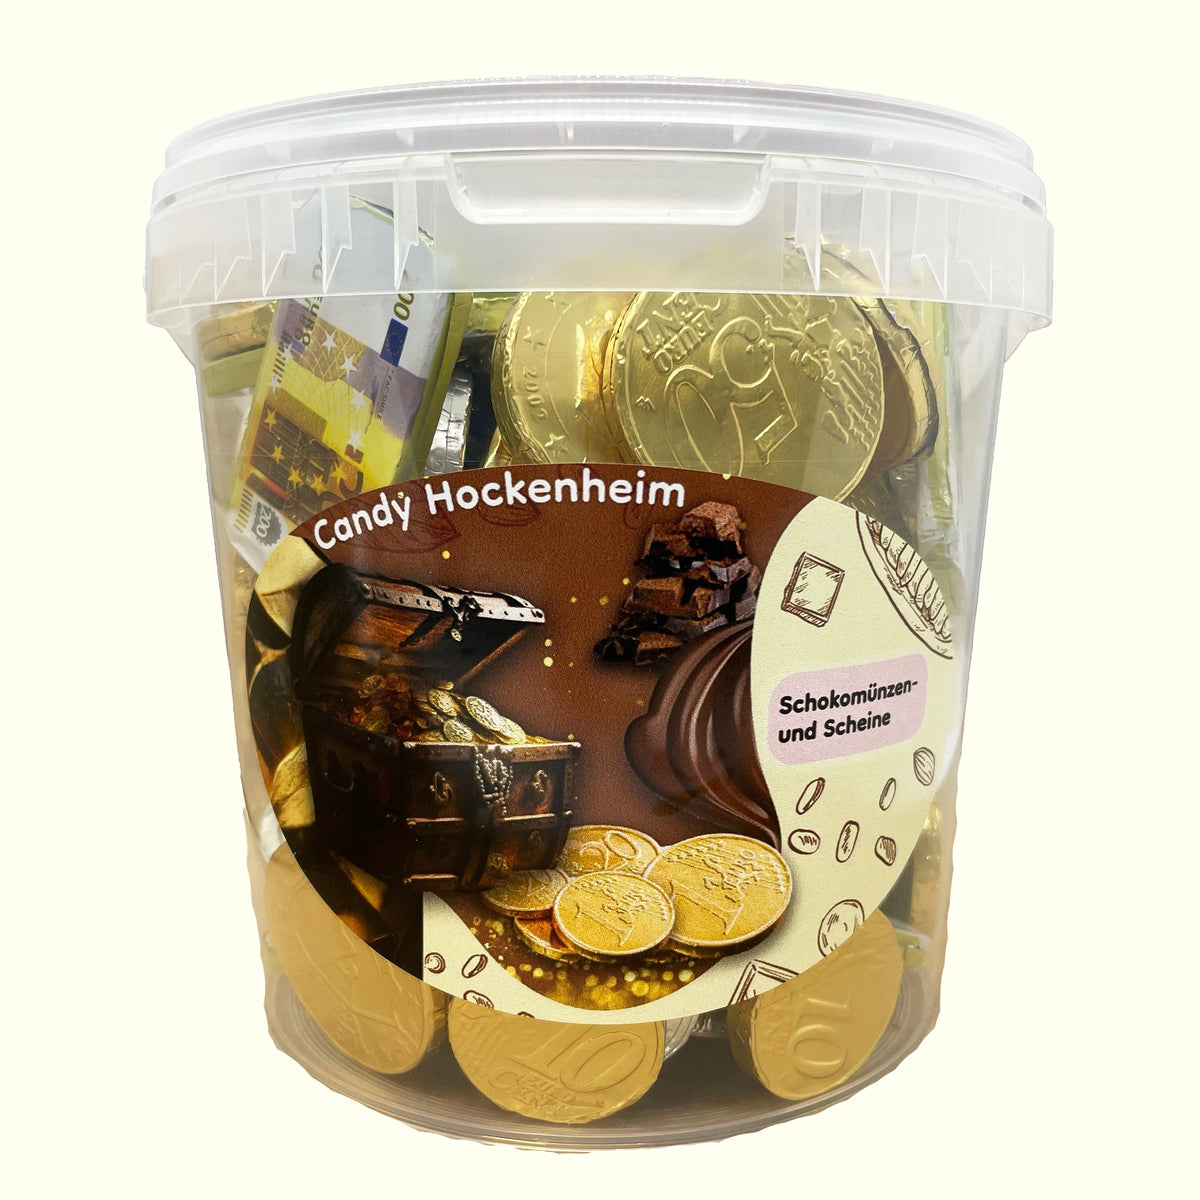 Candy Hockenheim Goldtaler Schokoladengeld aus Milchschokolade 750g